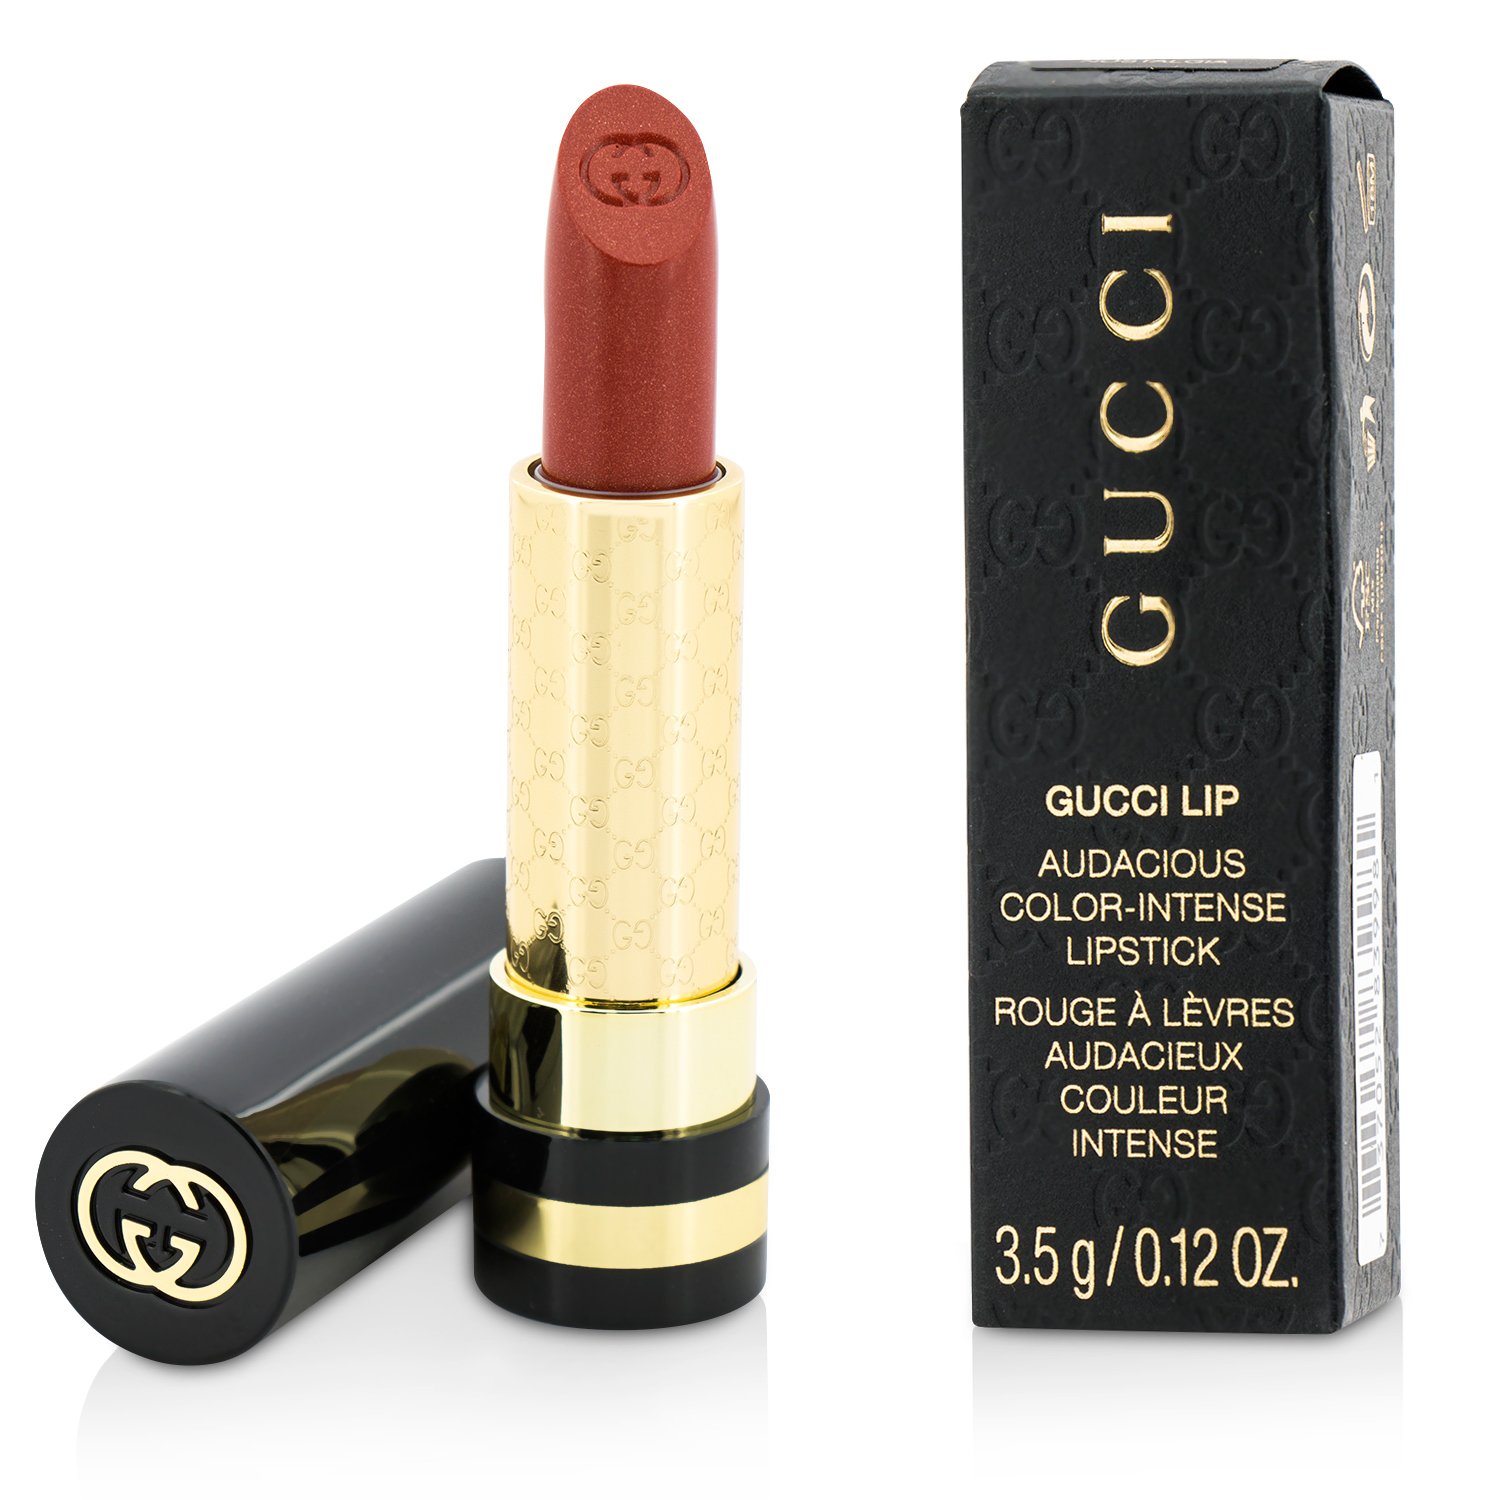 Audacious Color Intense Lipstick - #130 Antique Ruby Gucci Image